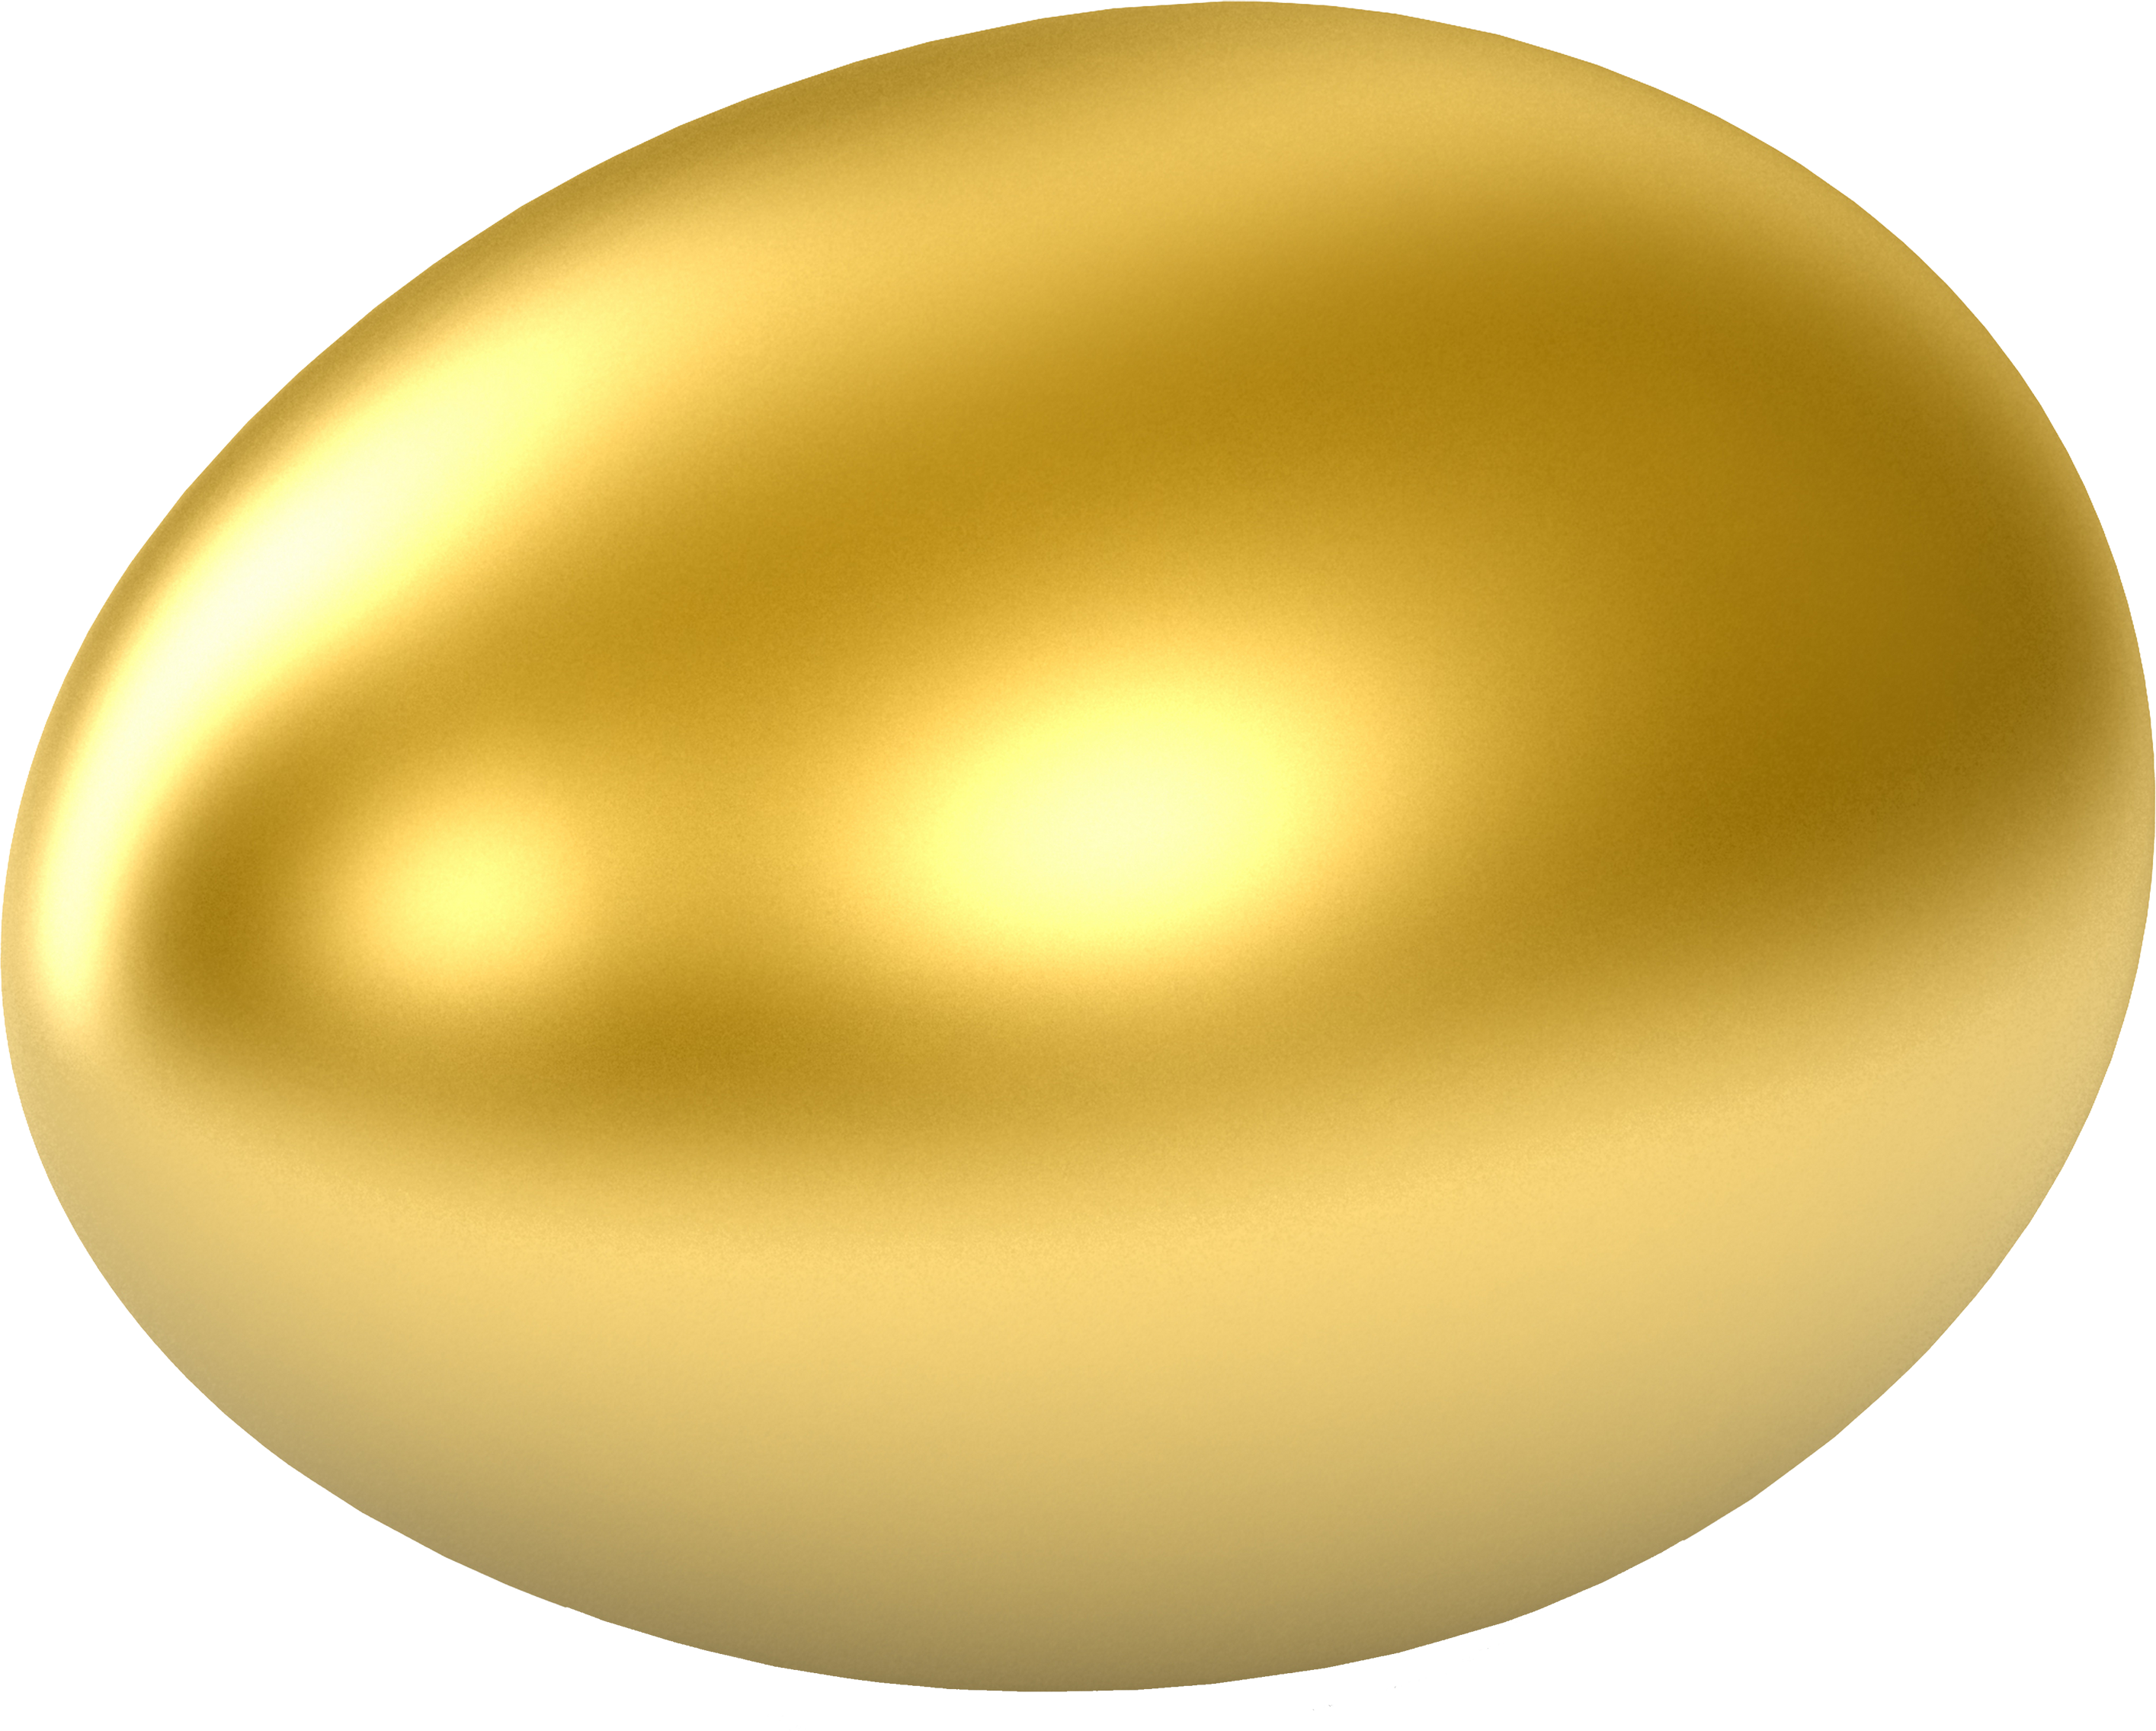 Gold Egg Png Image - Egg, Transparent background PNG HD thumbnail